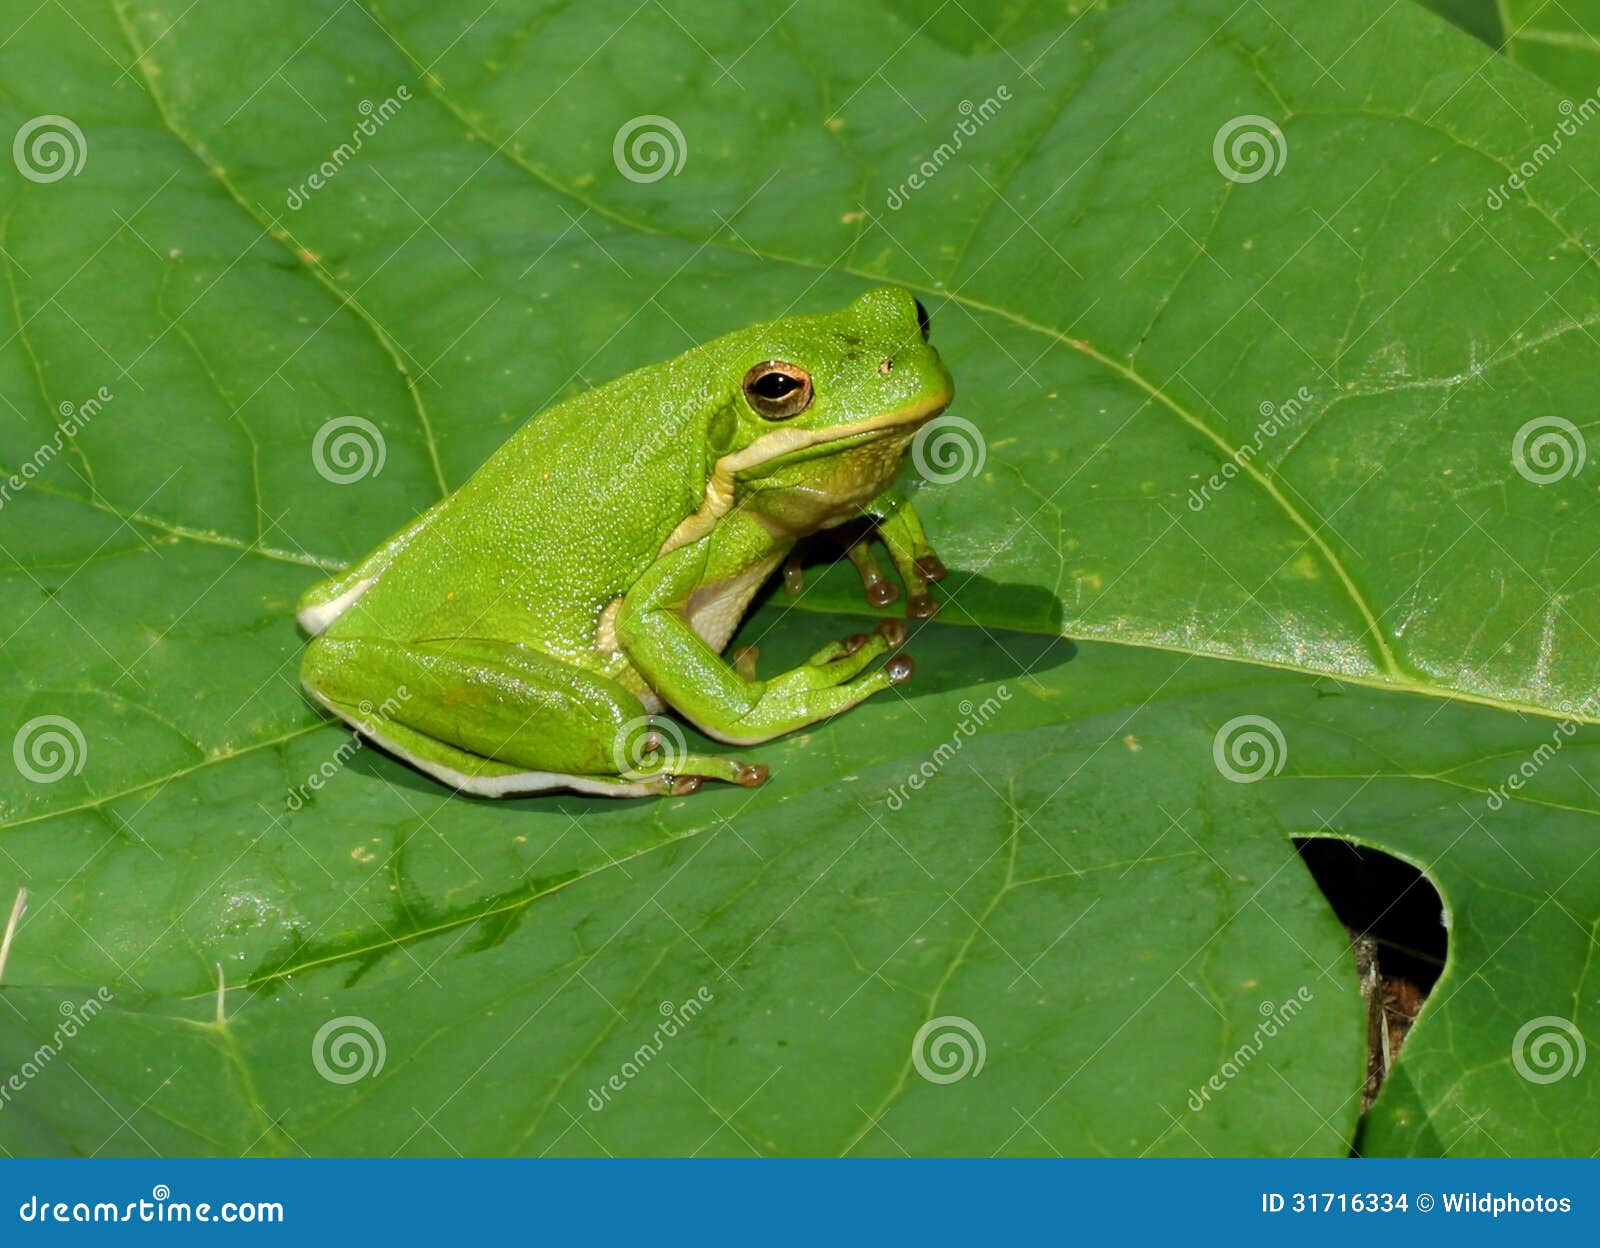 american green treefrog